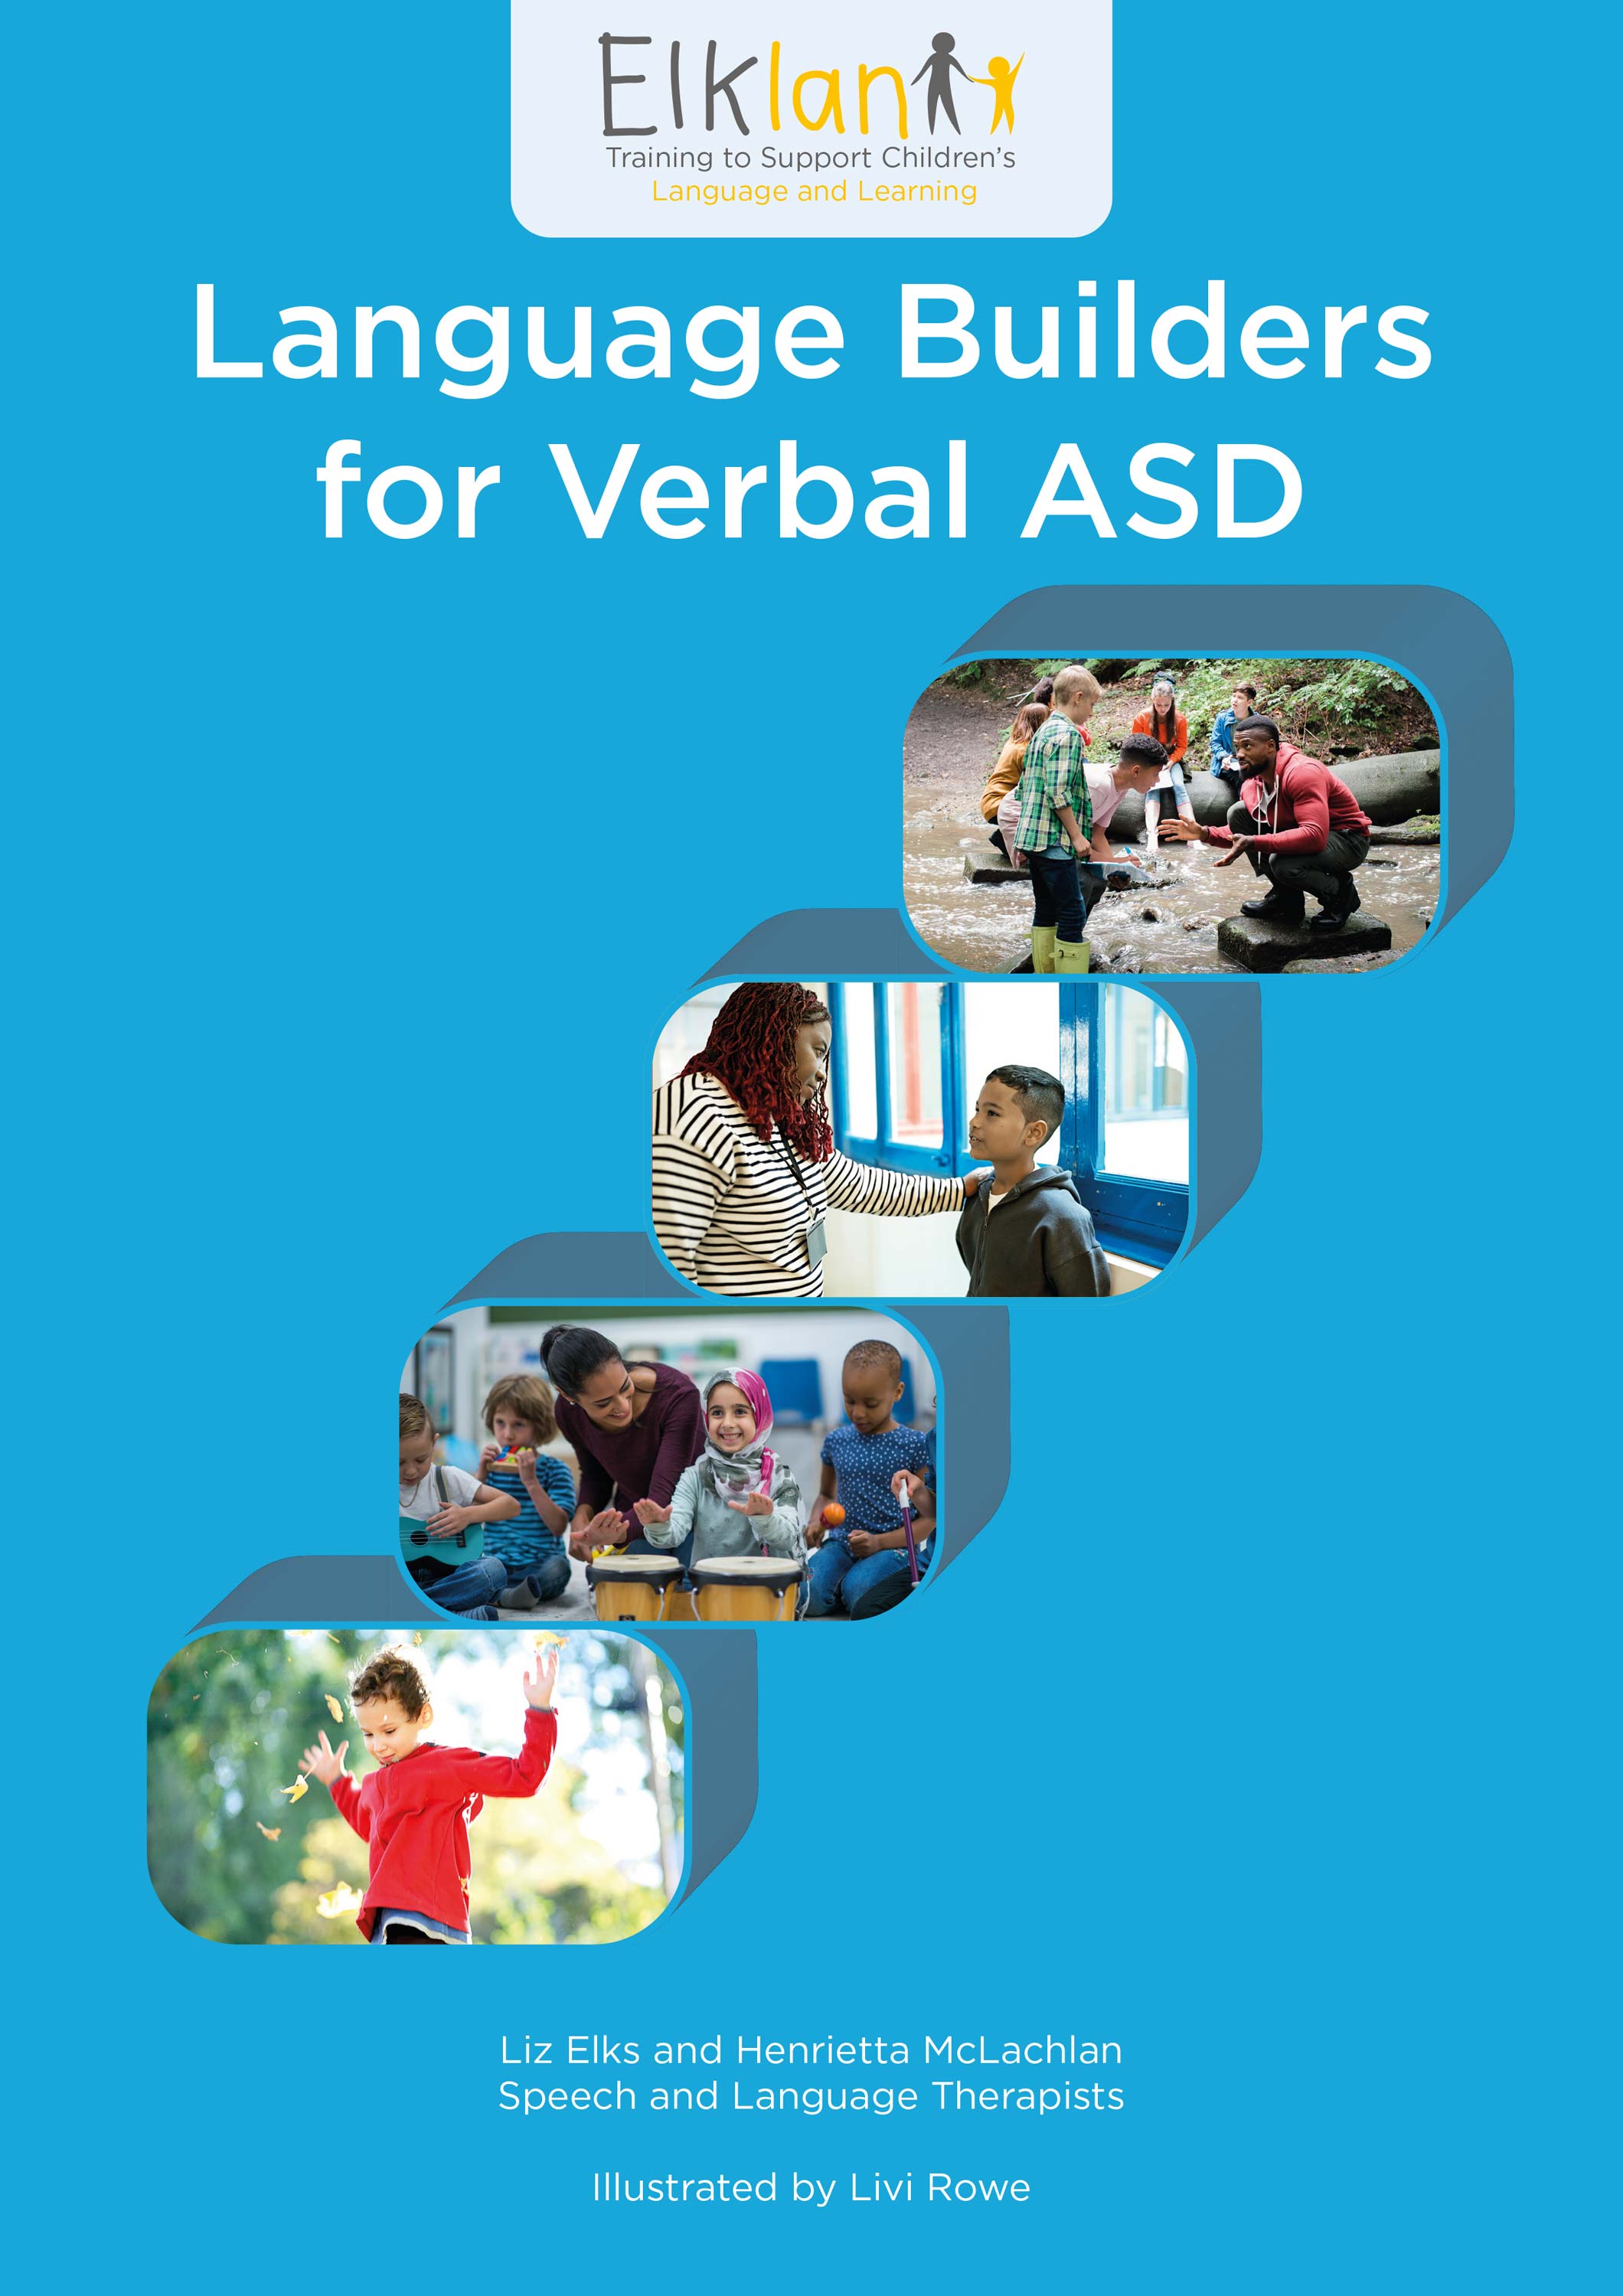 Language Builders for Verbal ASD e-book